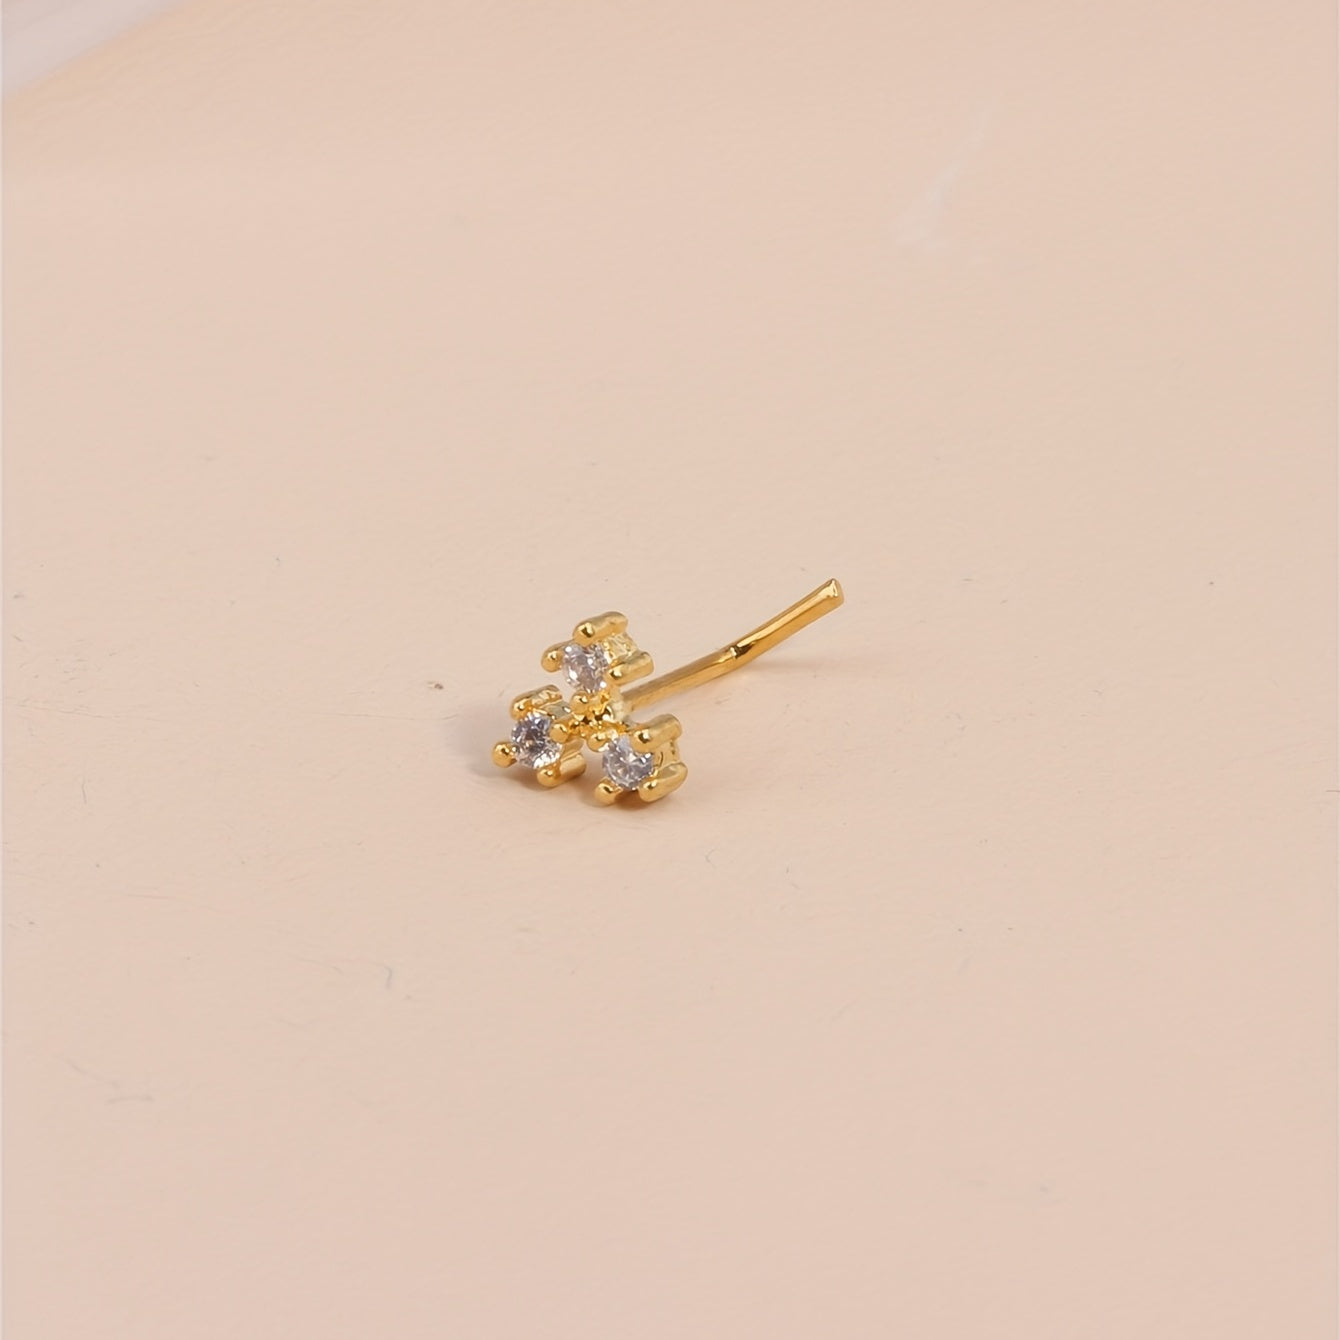 L Shape Nose Ring Stud Inlaid Shiny Zircon Simple Minimalist Body Piercing Jewelry